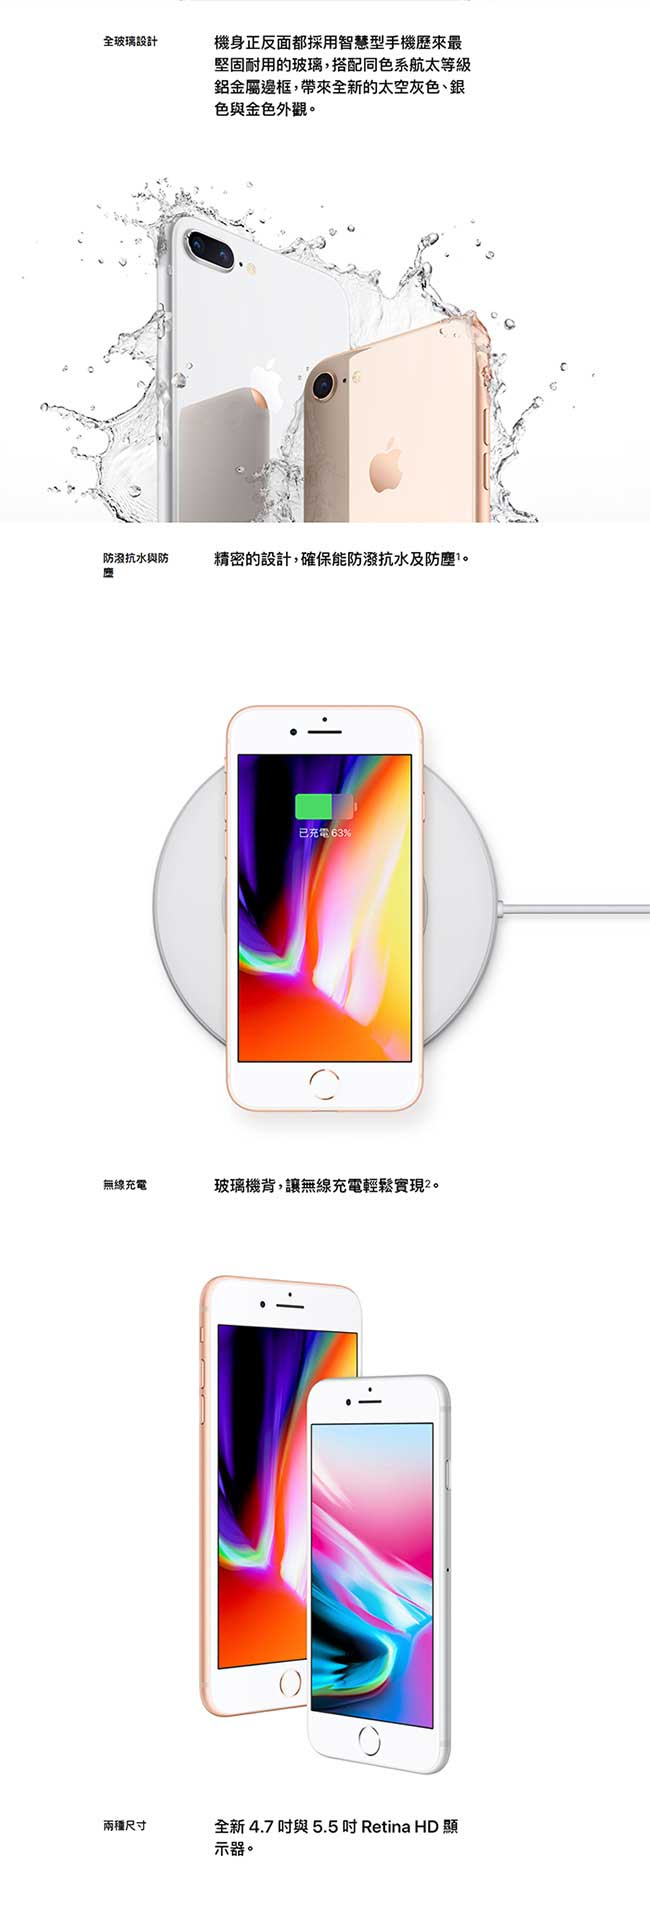 Apple iPhone 8 Plus 64G 5.5吋智慧手機